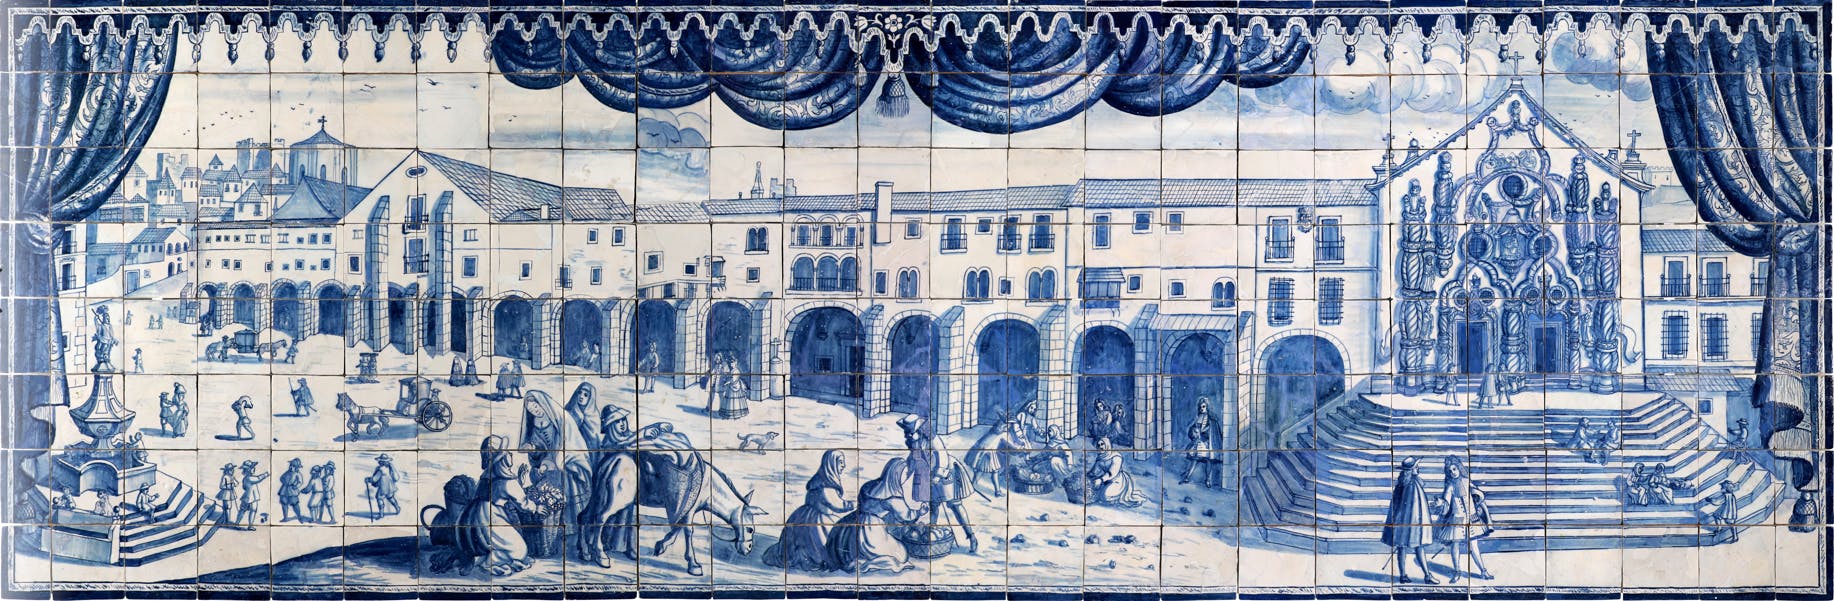 Panel de azulejos figurativo, de principios del siglo XVIII, procedente de un taller de Lisboa. Colecção do Museu de Lisboa /Câmara Municipal de Lisboa - EGEAC